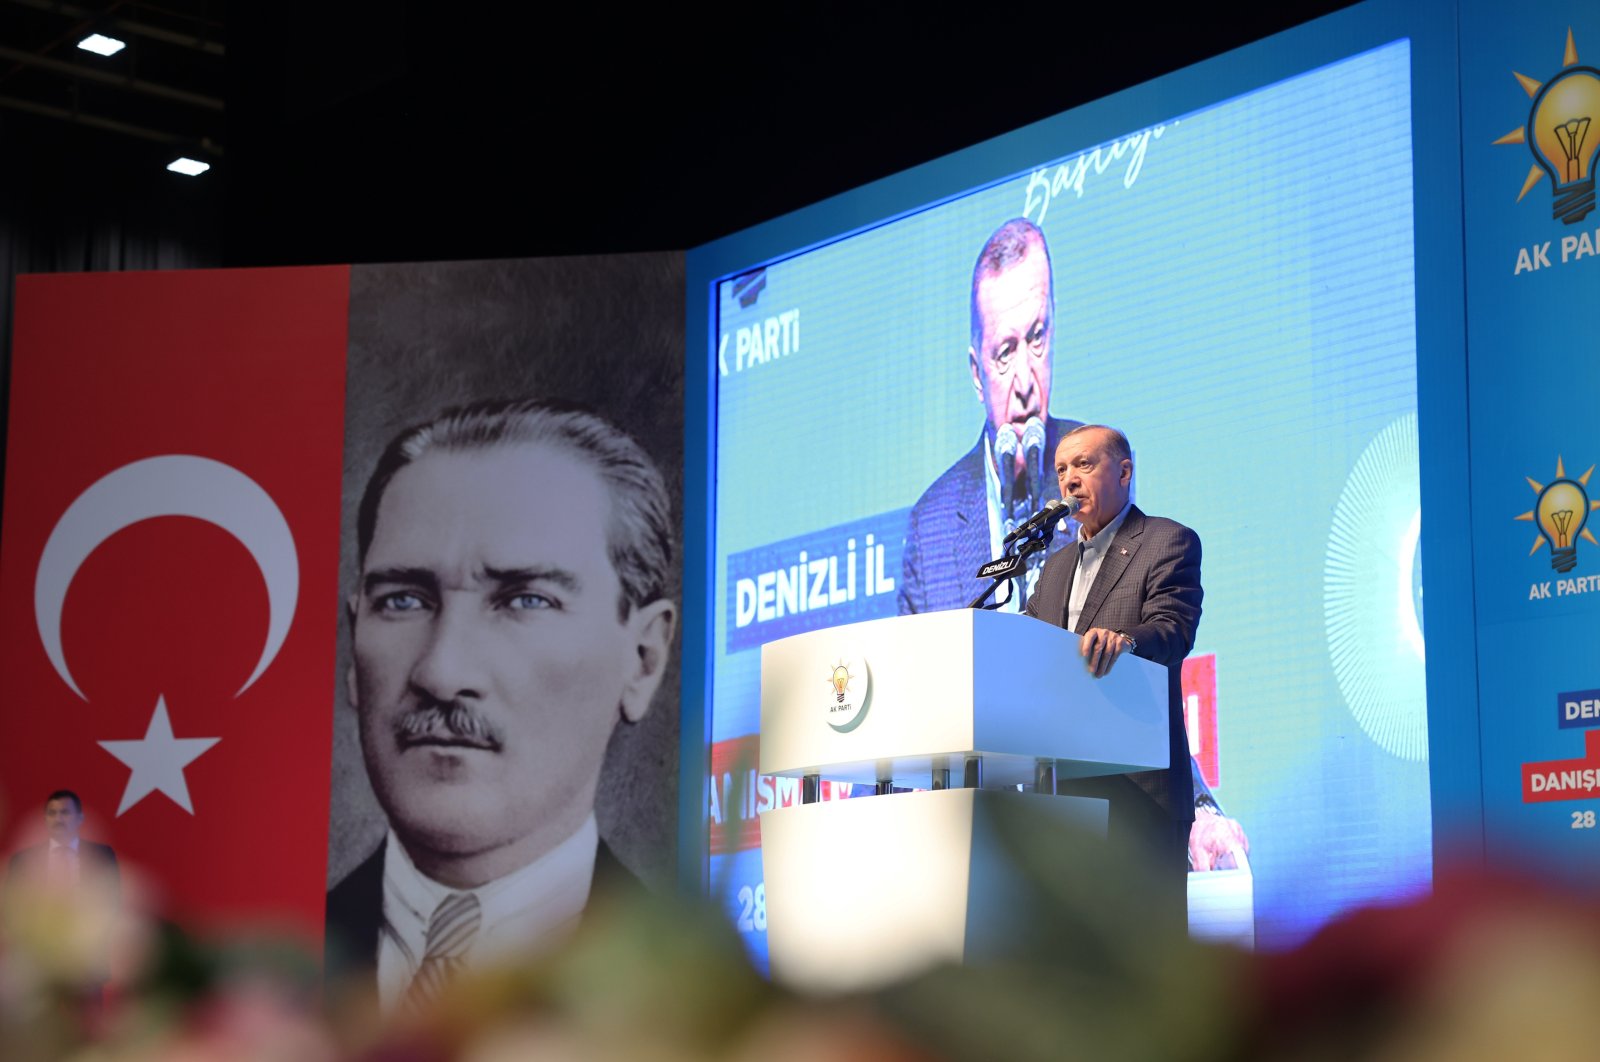 President Recep Tayyip Erdoğan attends a meeting of the Justice and Development Party (AK Party) in Denizli province, southwestern Türkiye, Jan. 28, 2023. (AA Photo)